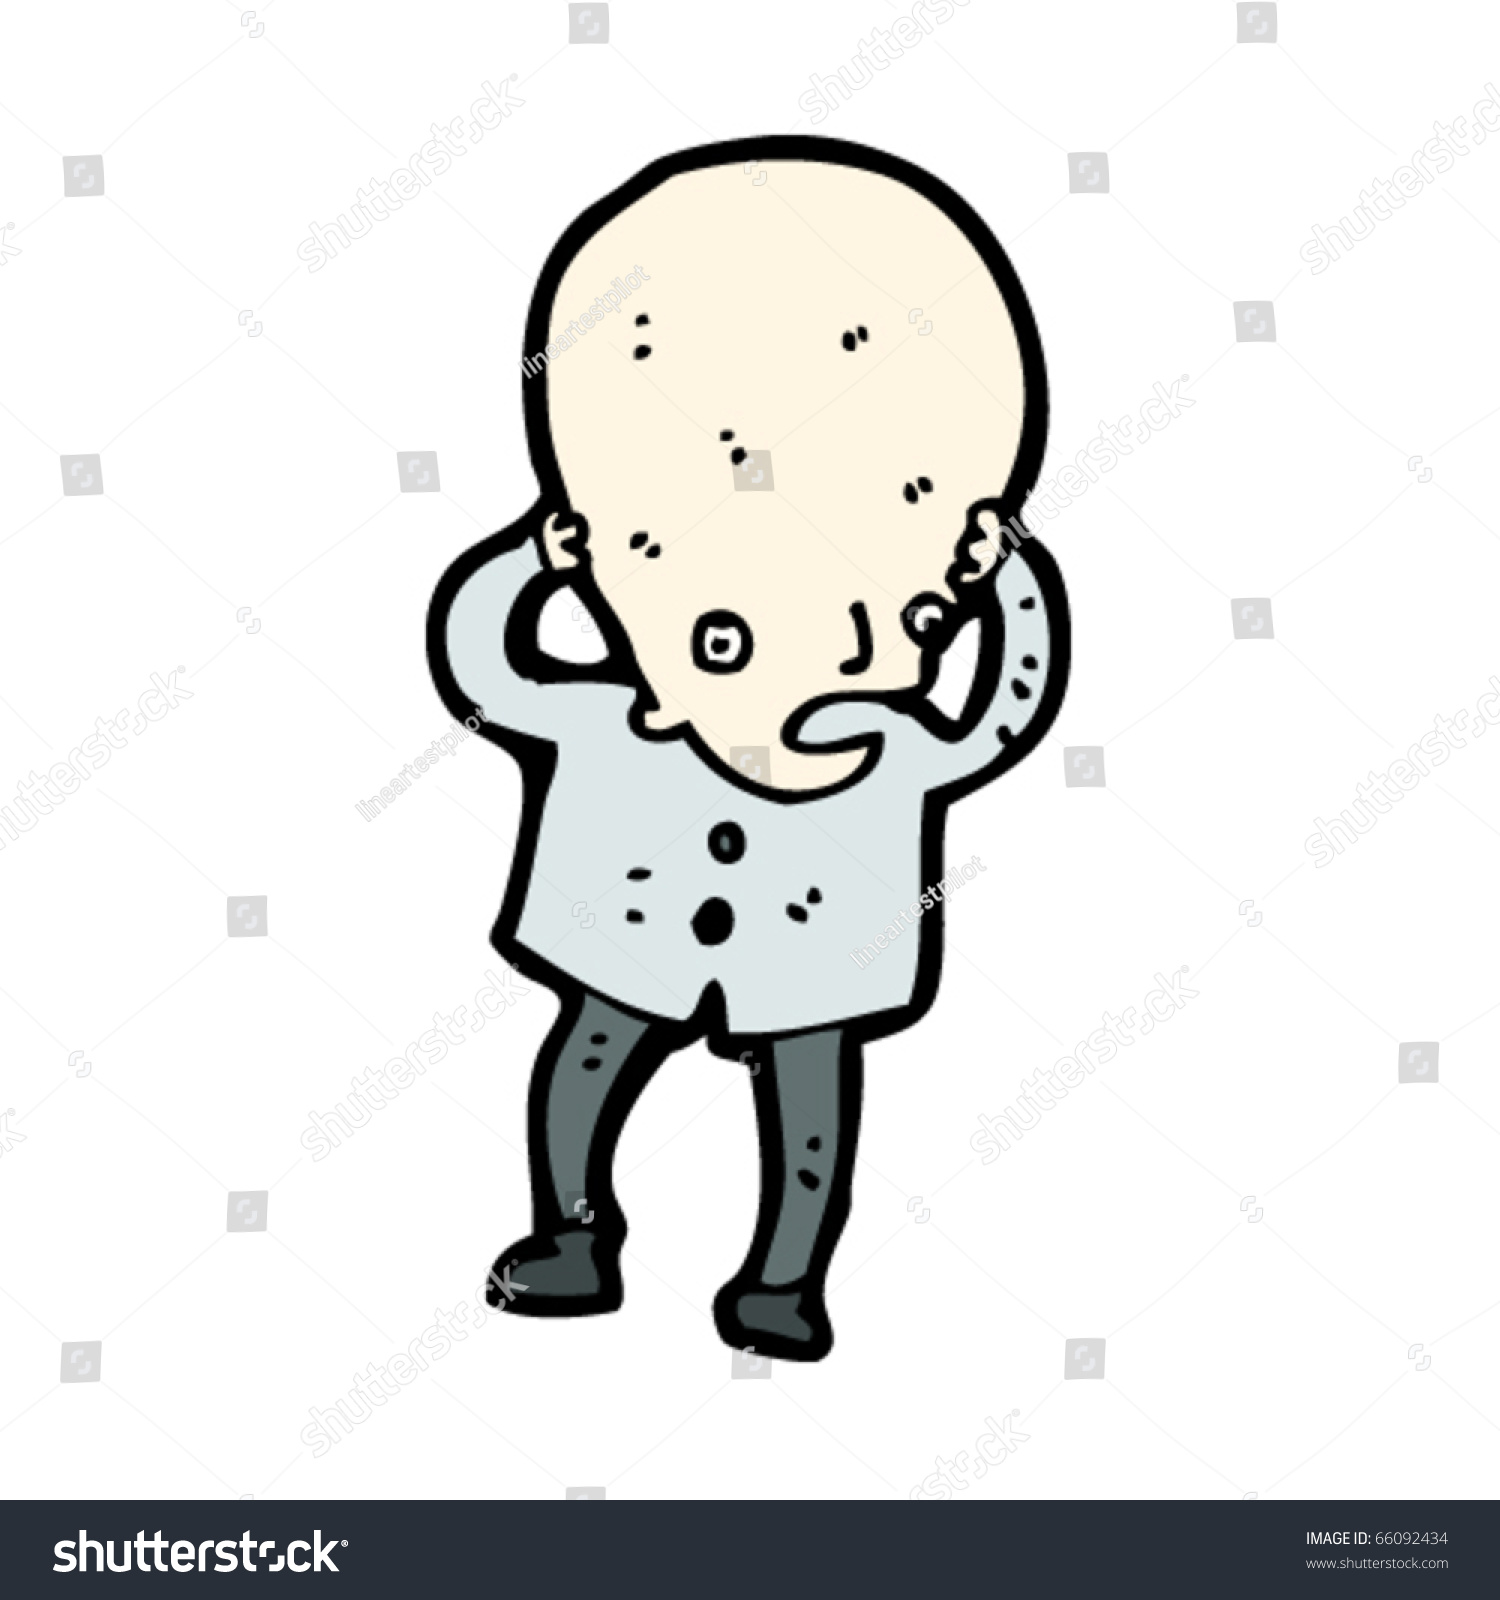 Huge Brain Man Cartoon Stock Vector Illustration 66092434 : Shutterstock